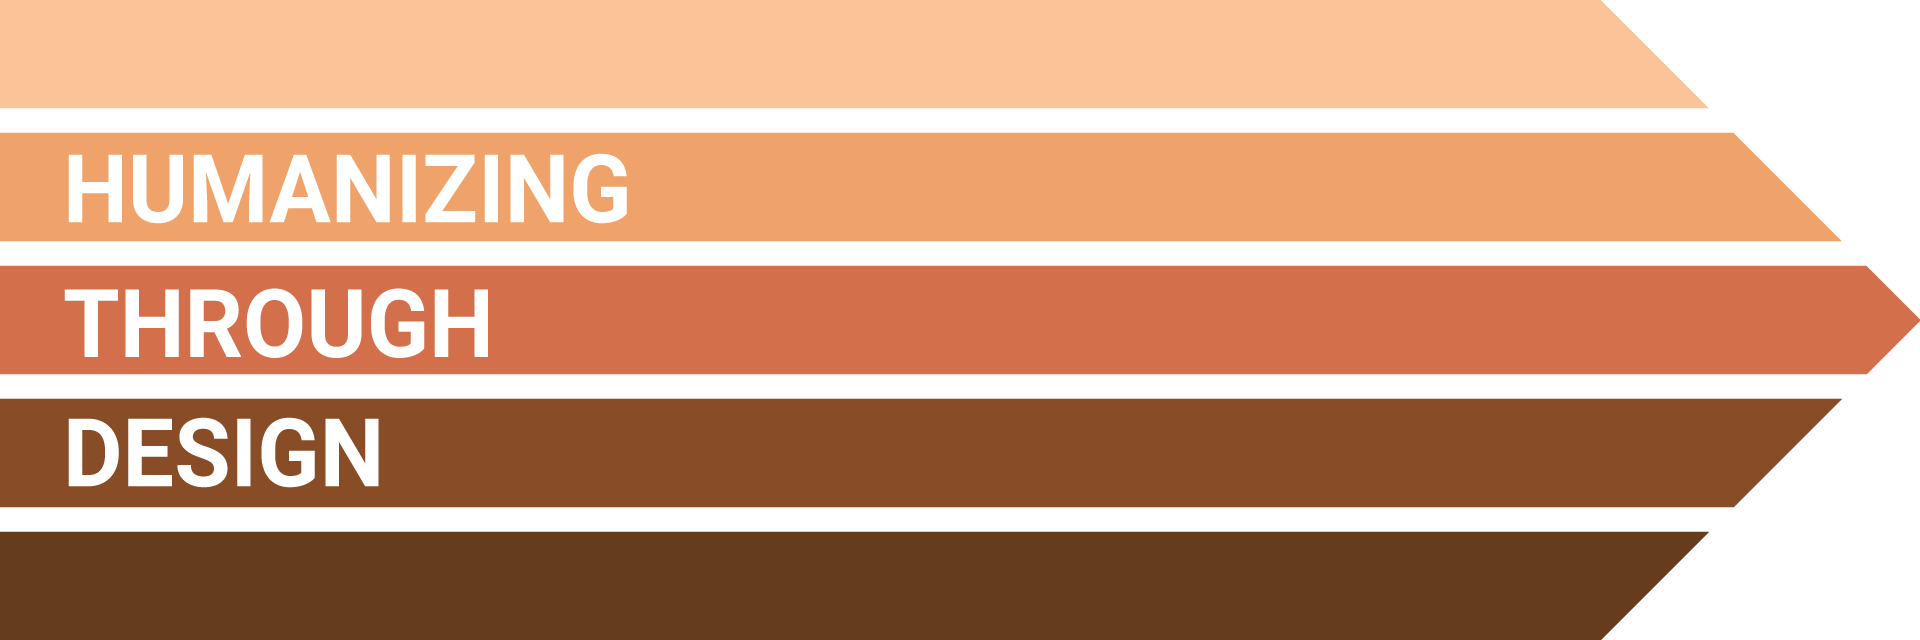 Humanizing Through Design illustration of skin color shades